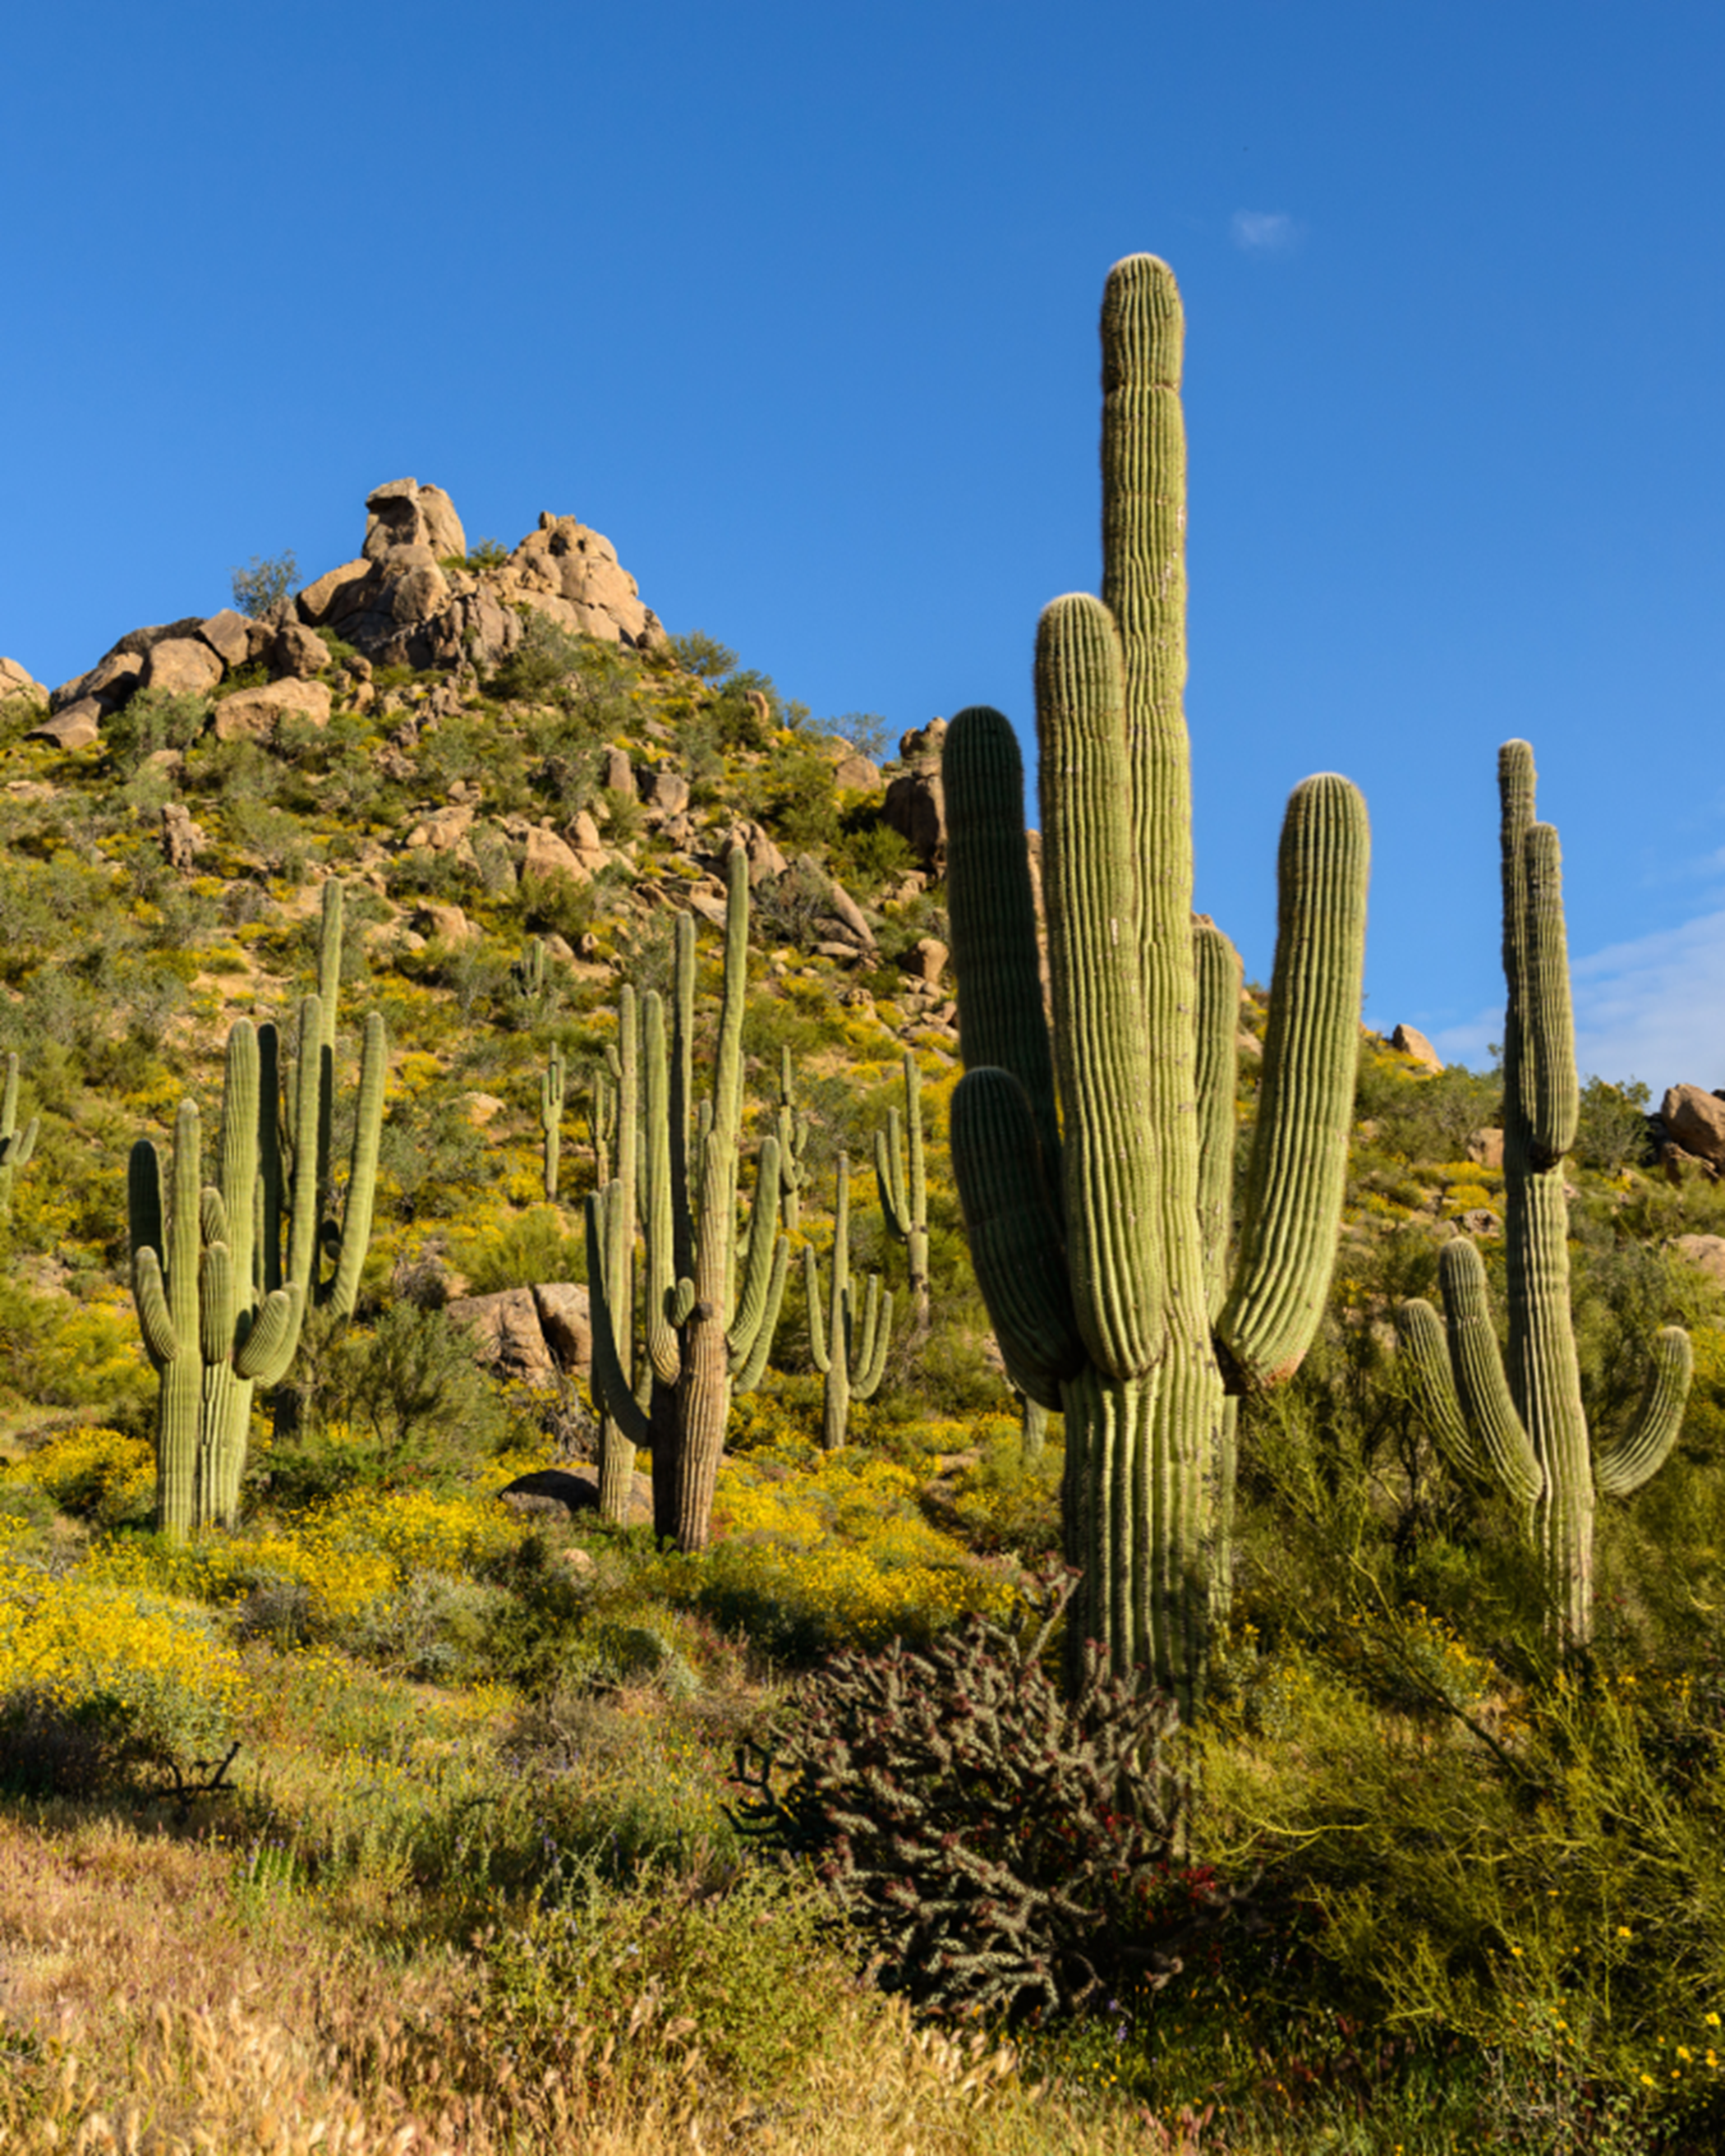 Cacti in the sonoran desert